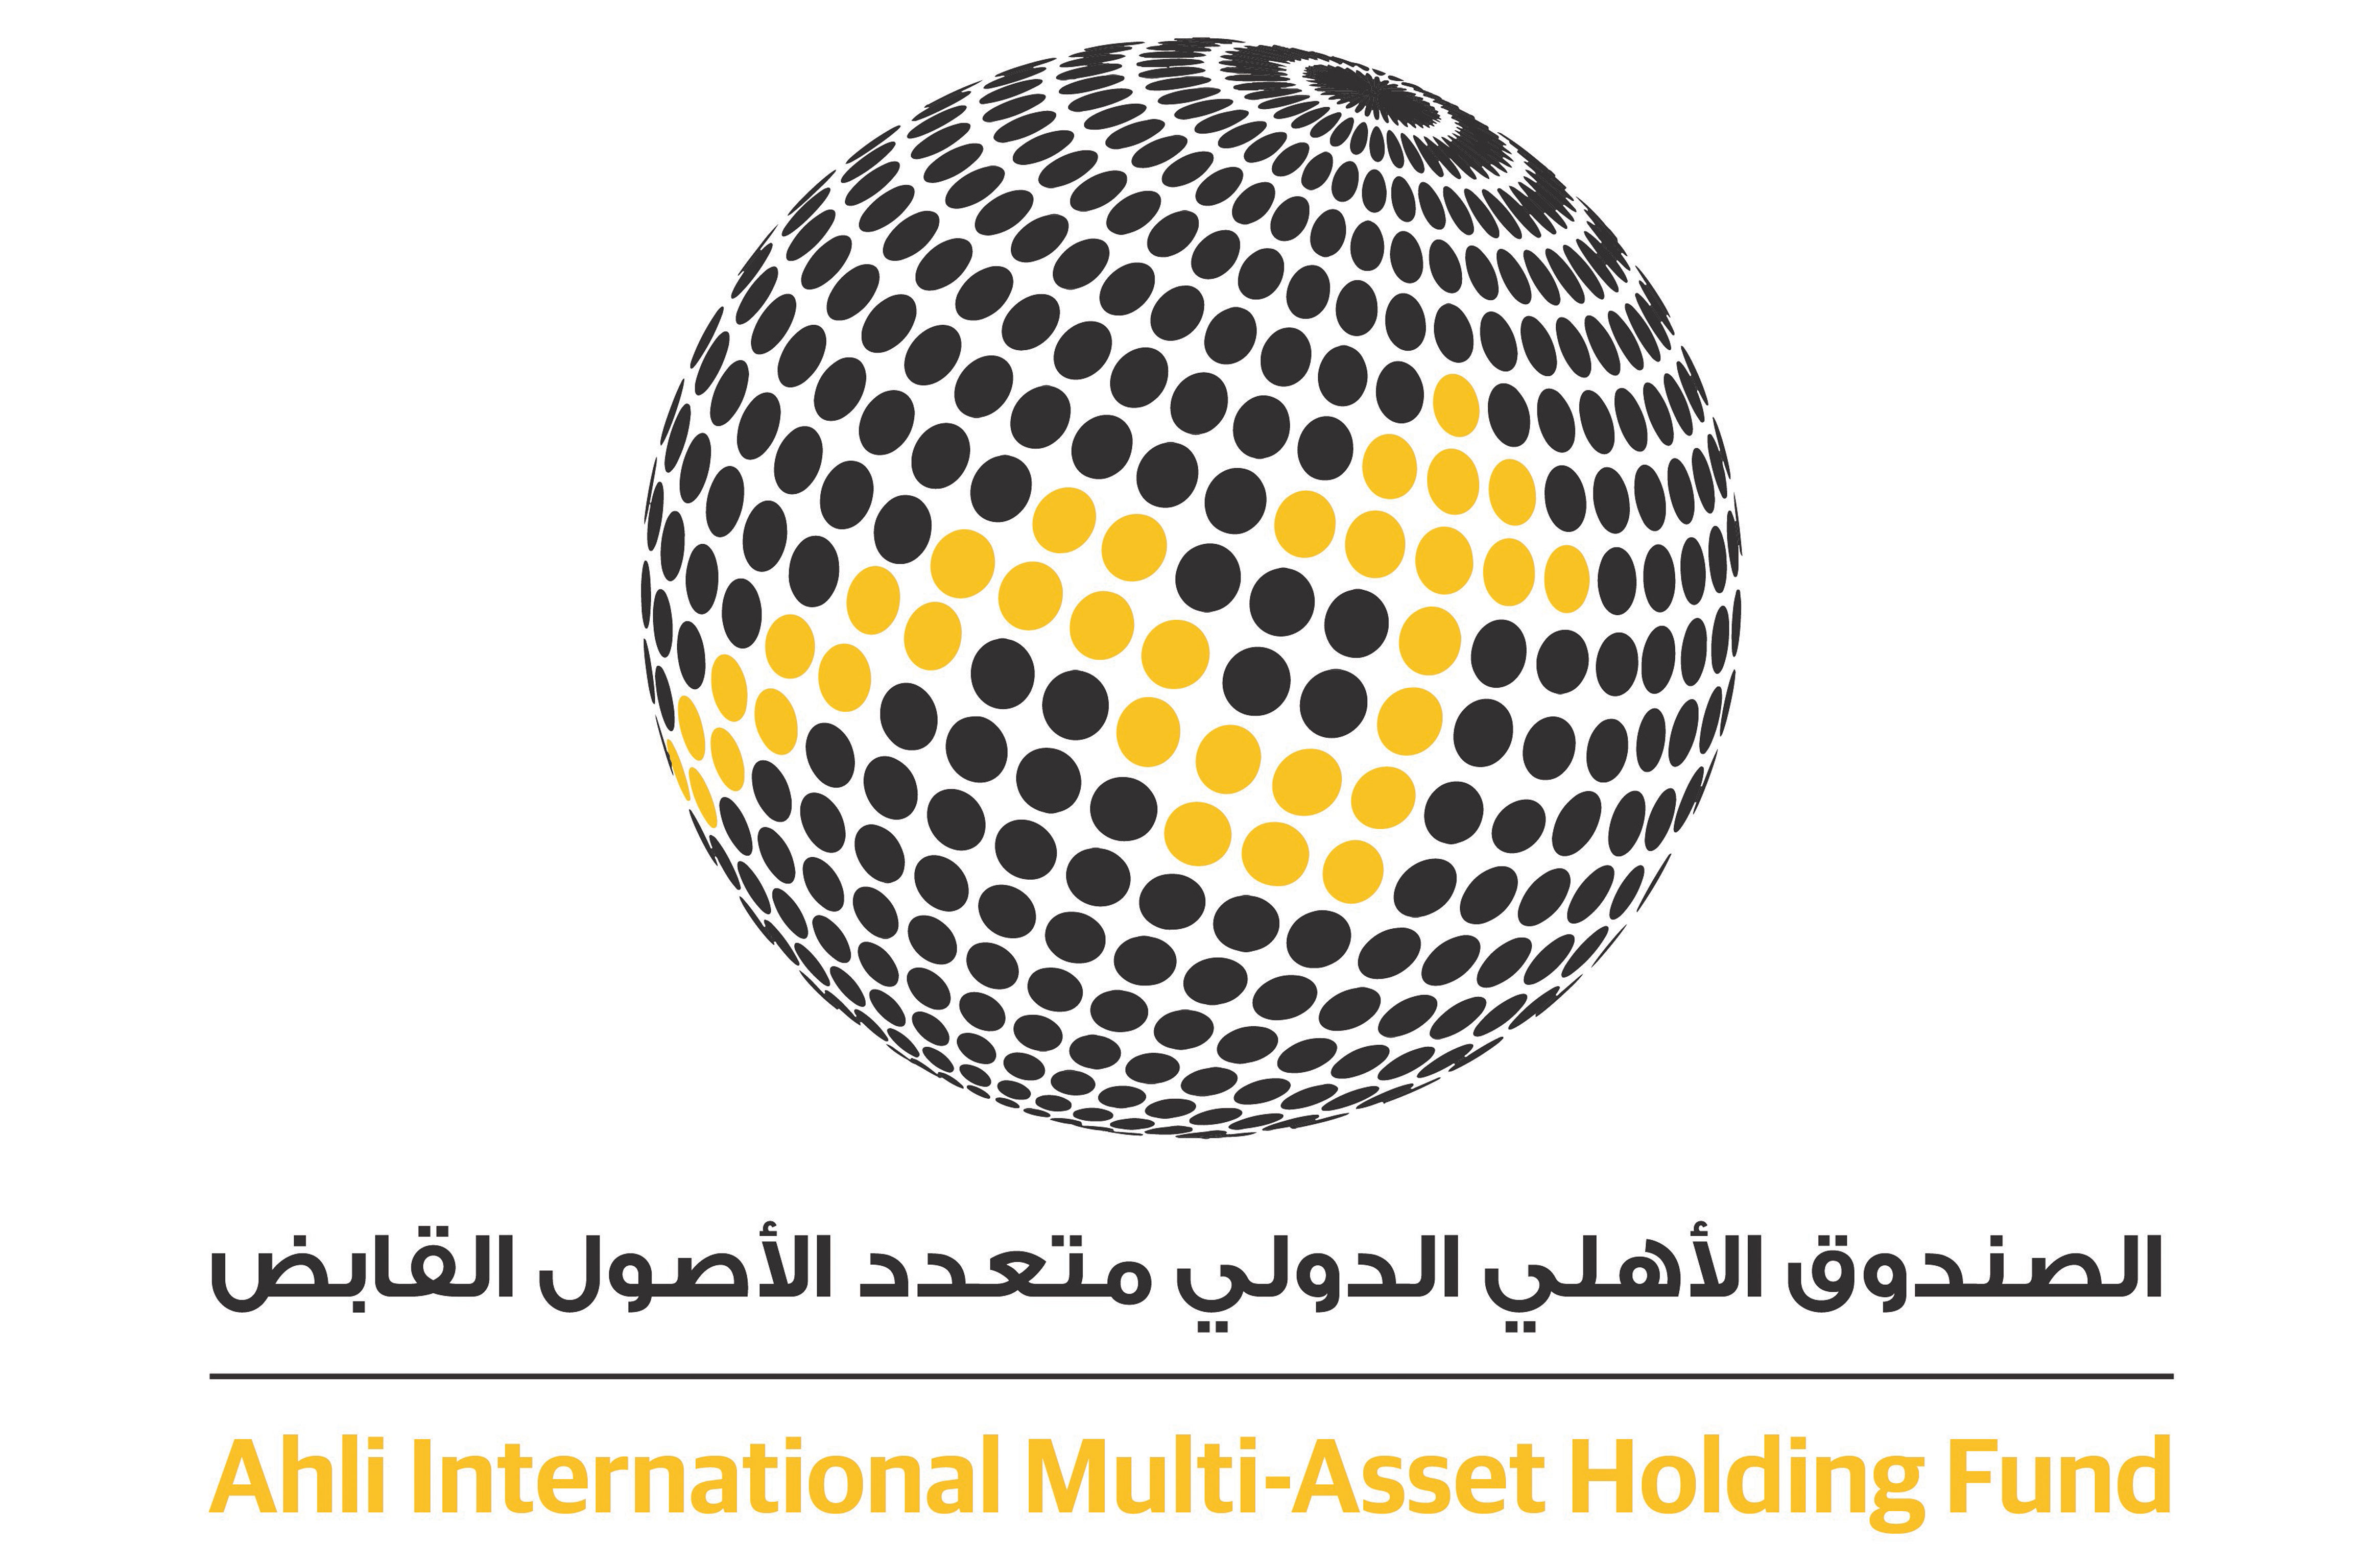 Update of Ahli International Multi-Asset Holding Fund Articles of Association